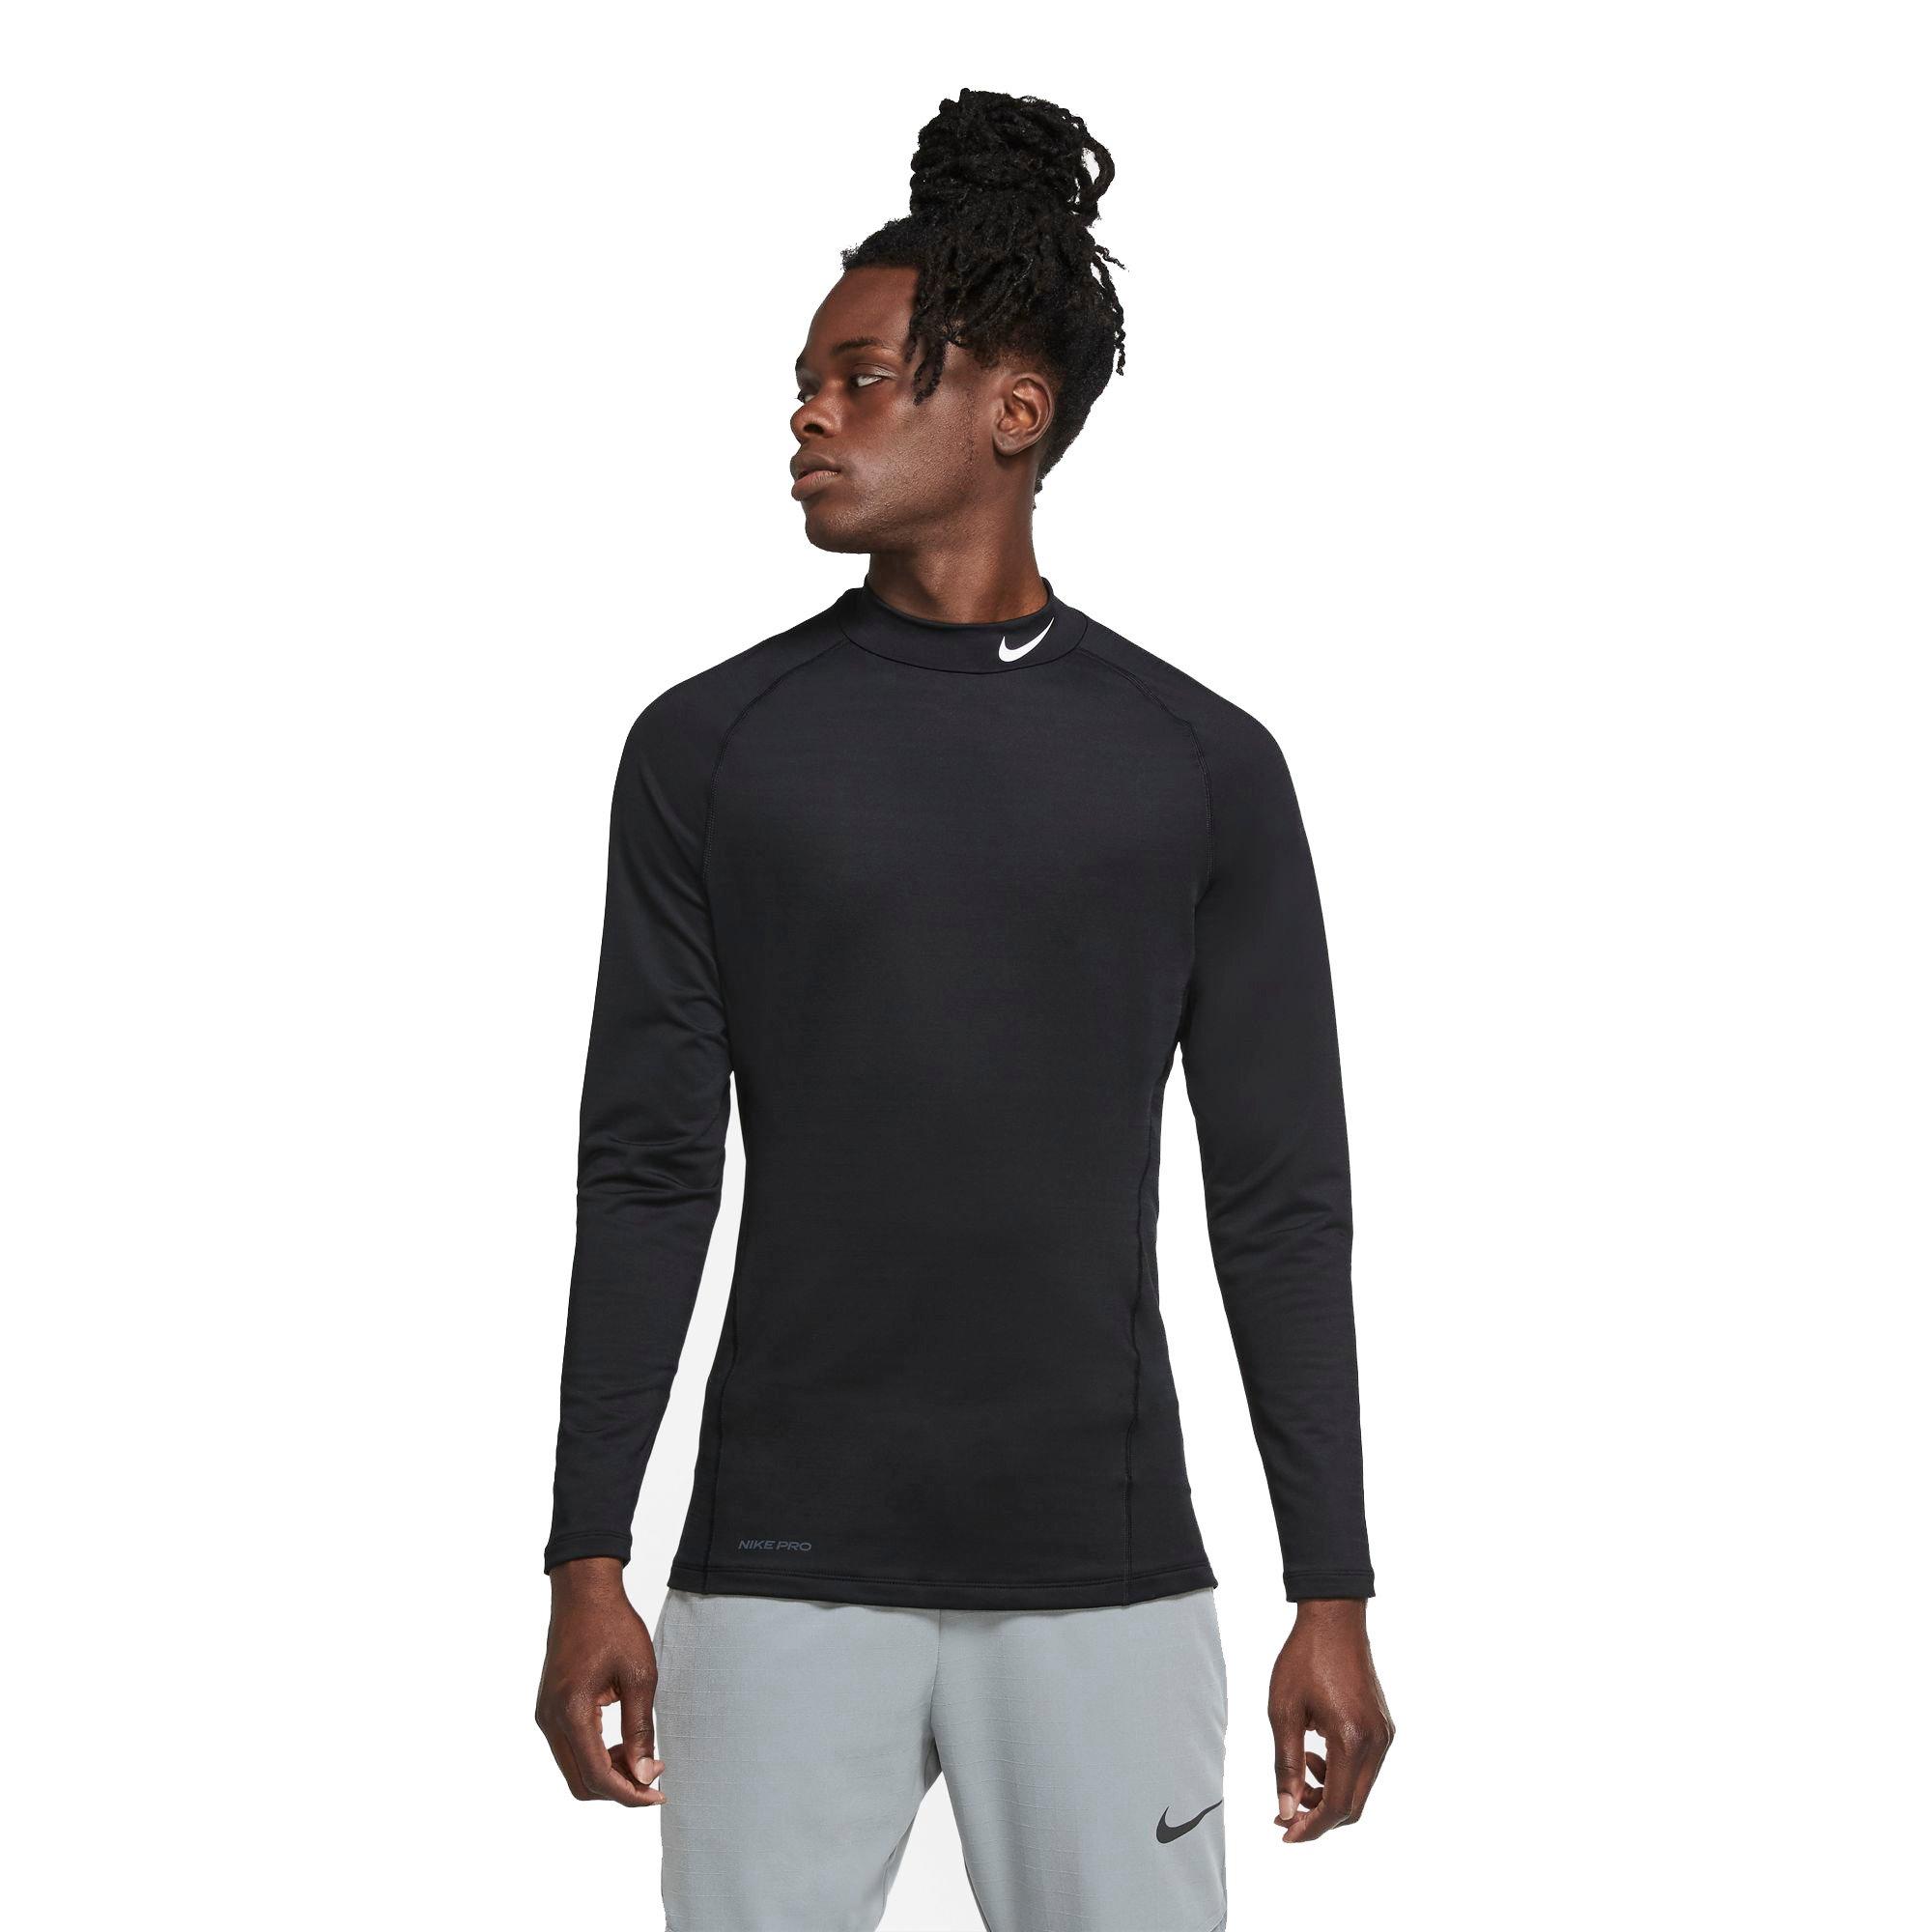 difícil haga turismo Sede Nike Men's "Black" Pro Warm Long-Sleeve Top